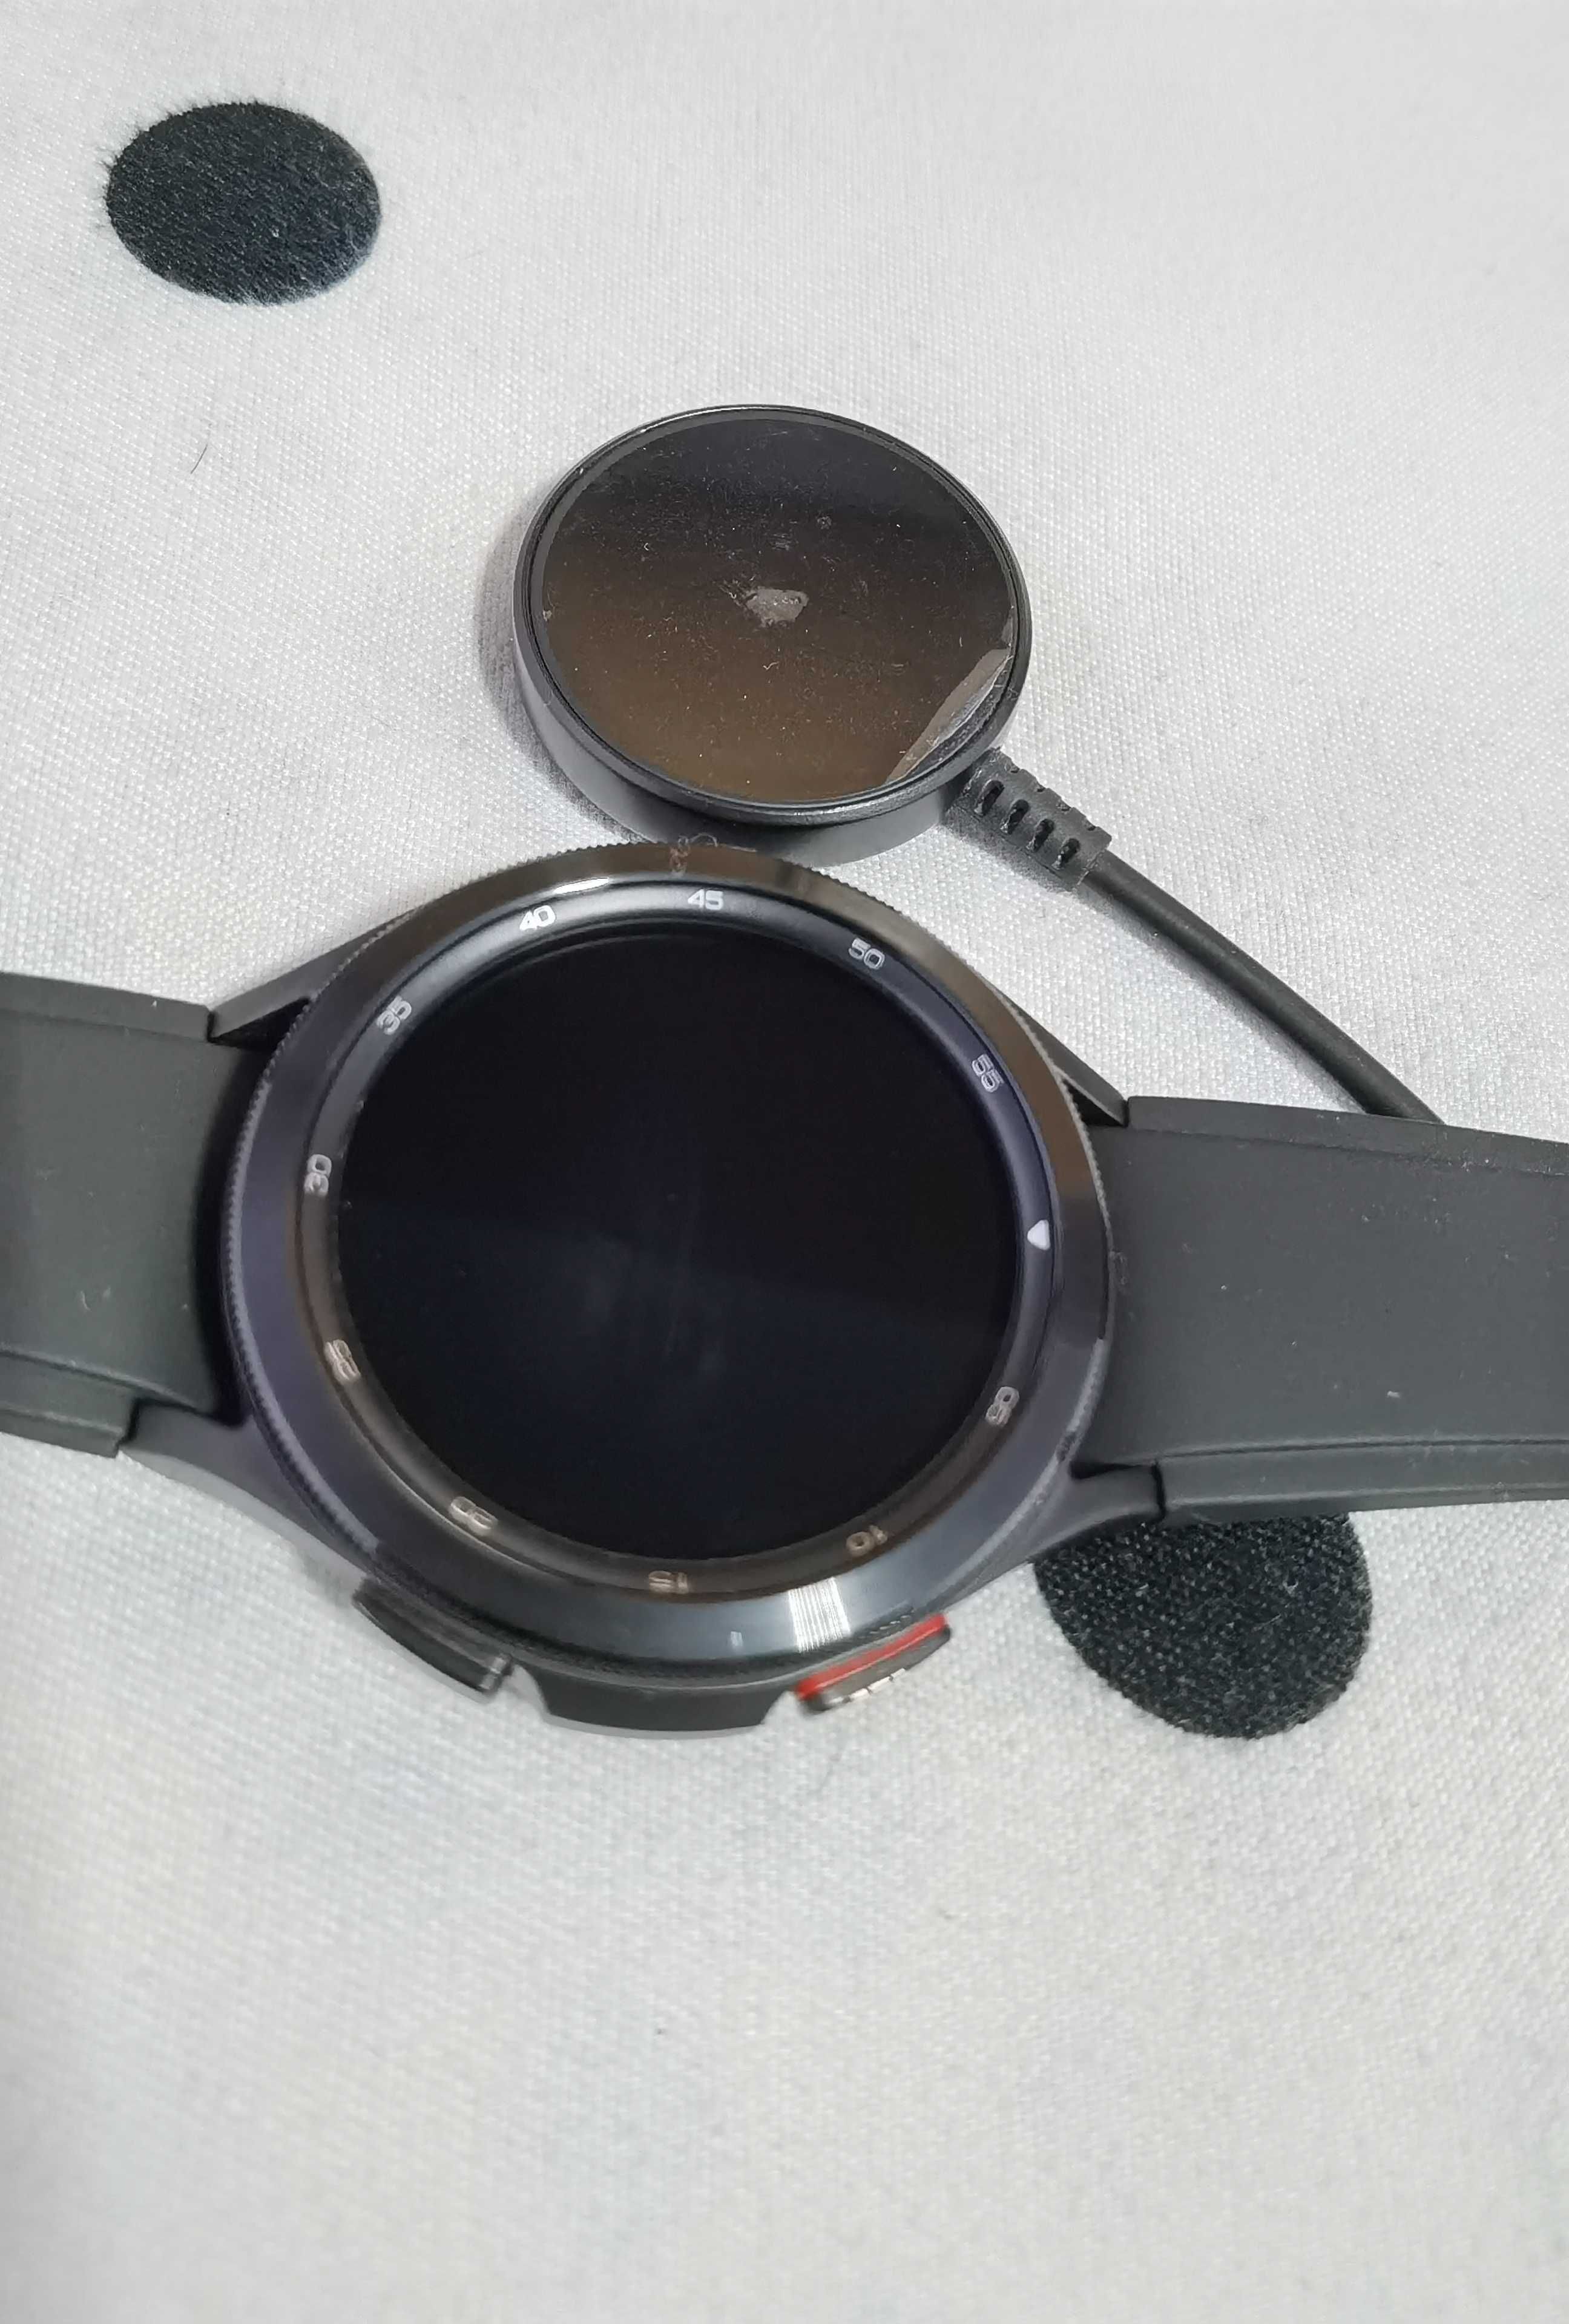 Samsung watch 4 classic